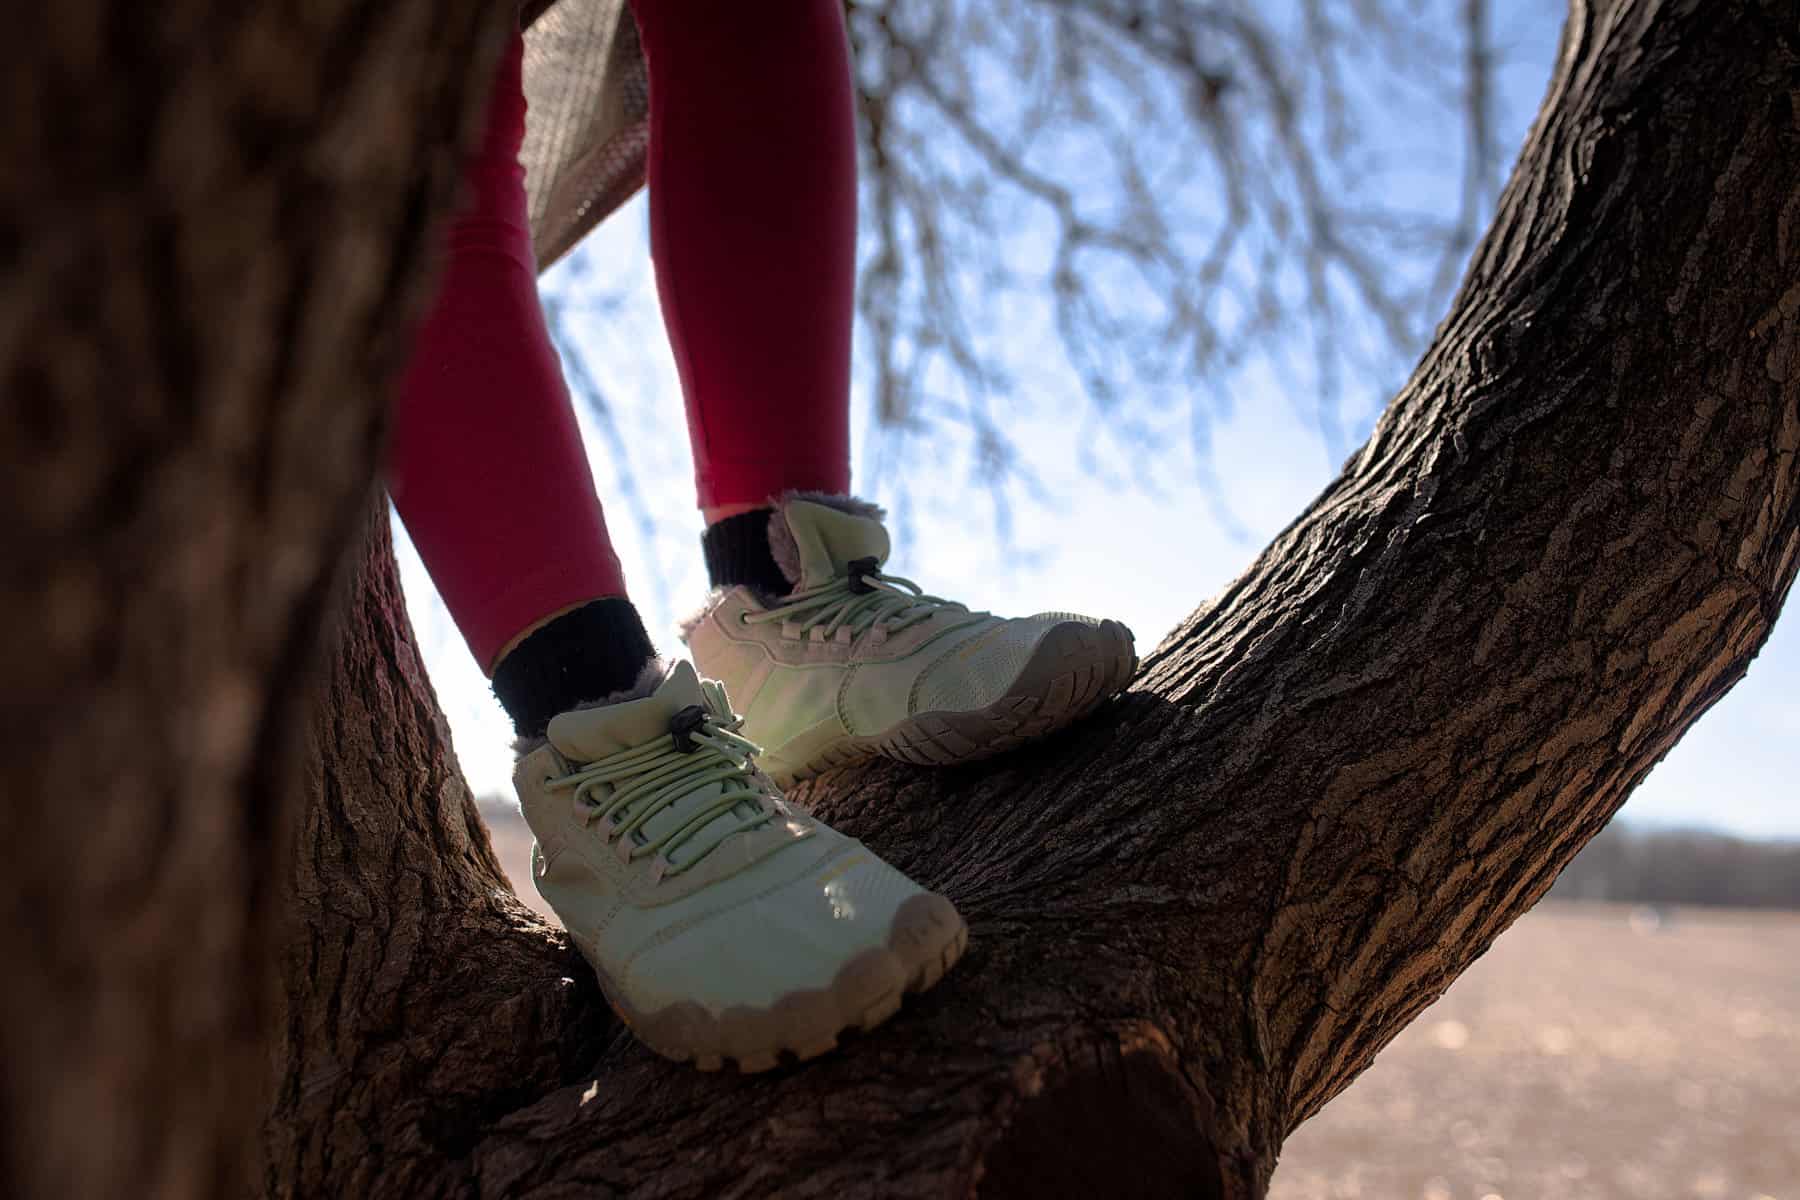 saguaro winter shoes